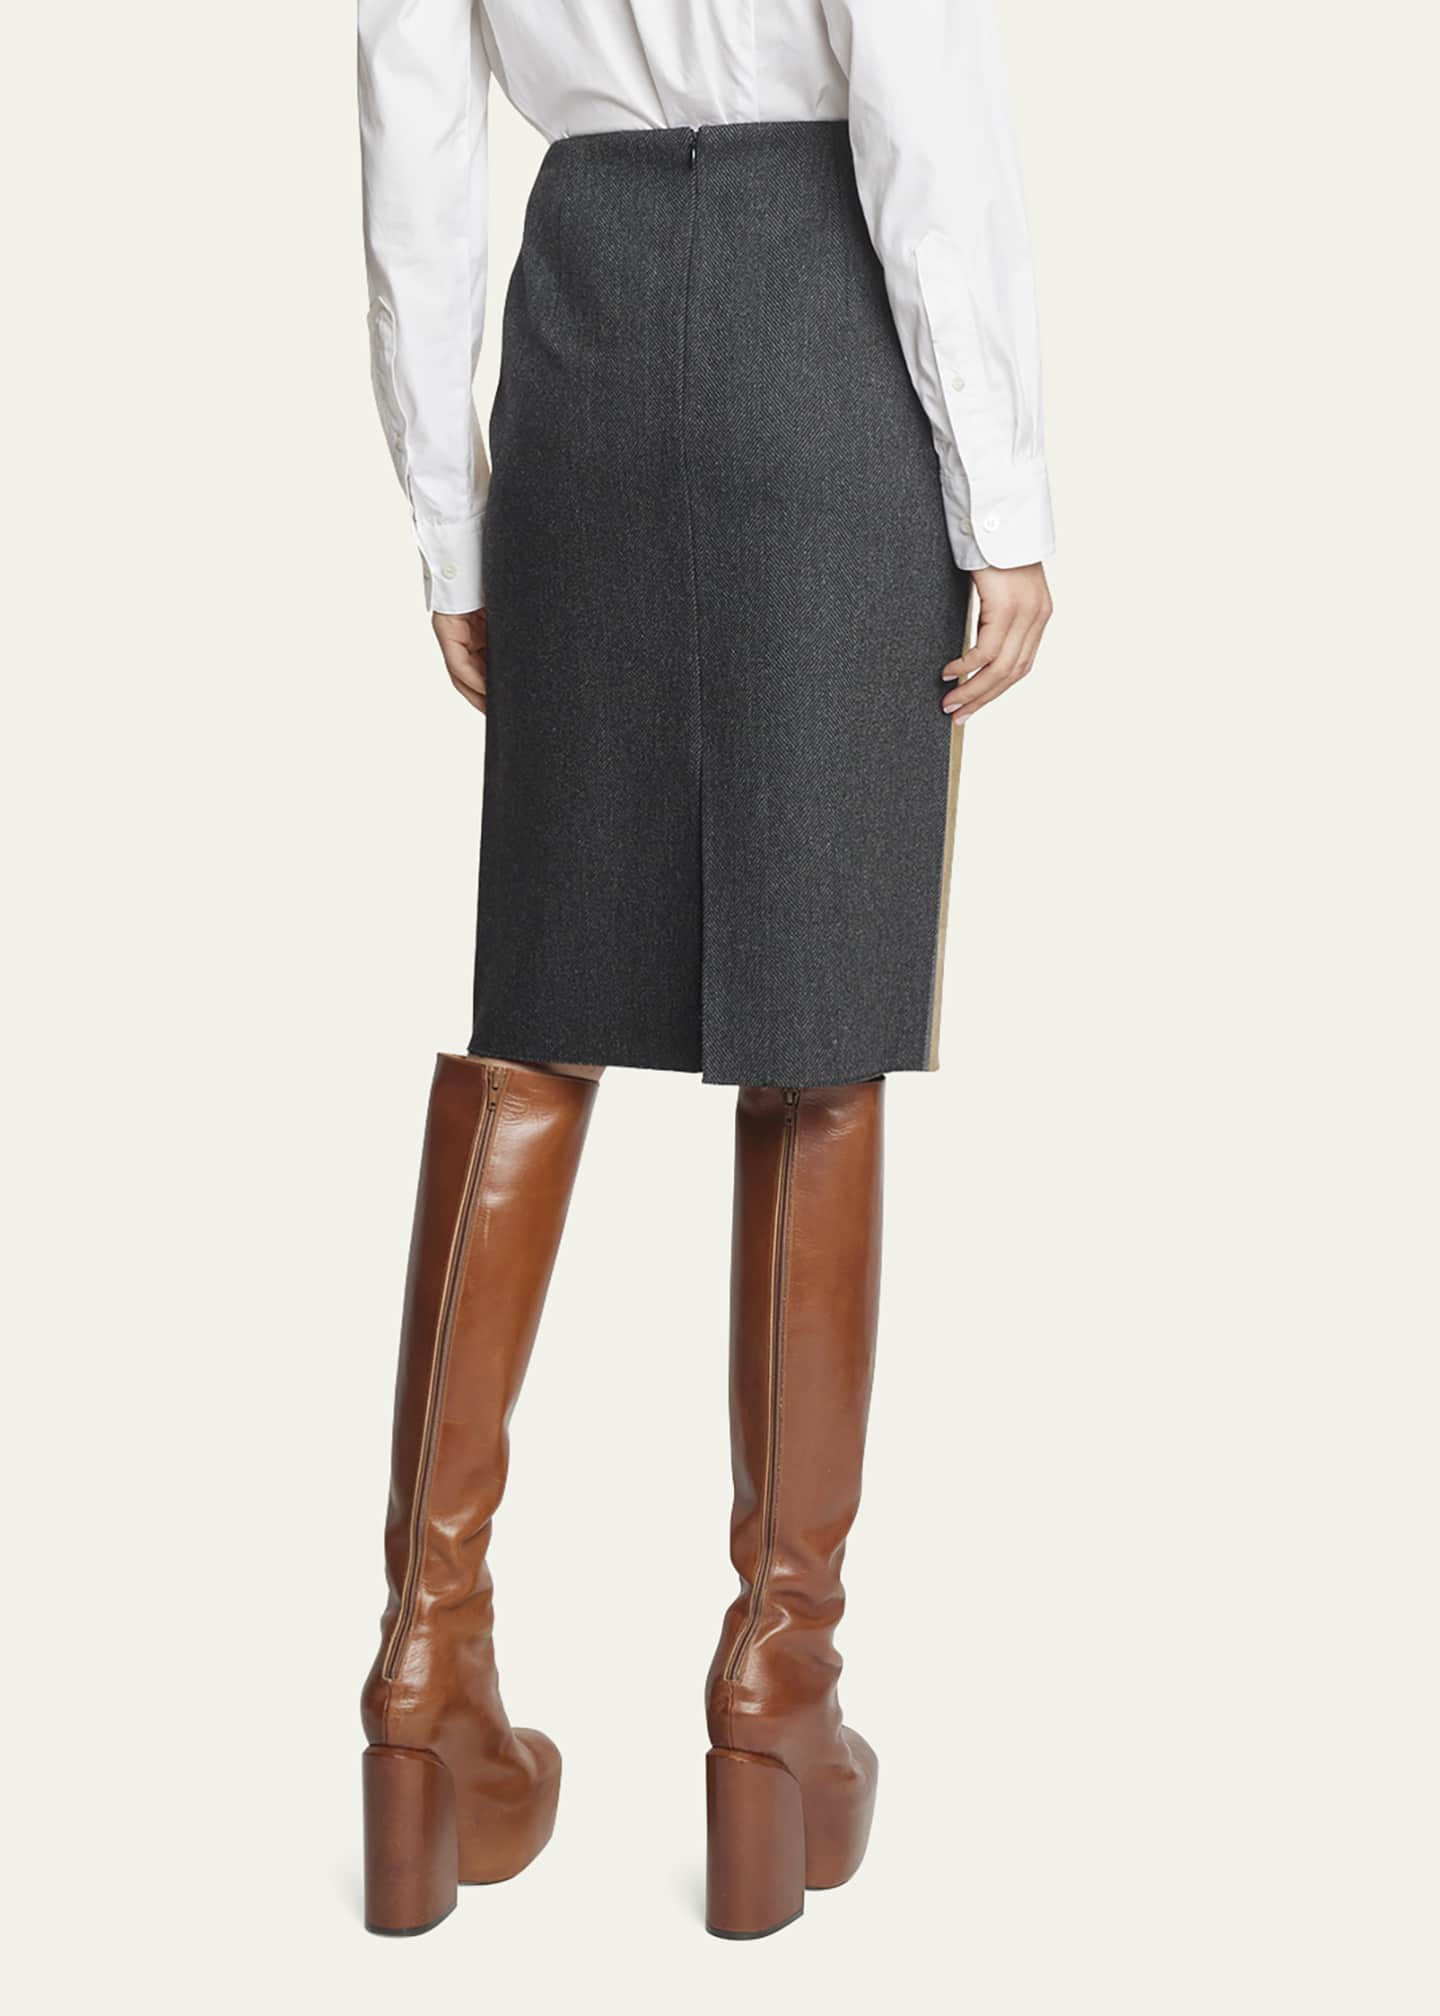 Dries Van Noten Salby Metallic Wool Pencil Skirt - Bergdorf Goodman